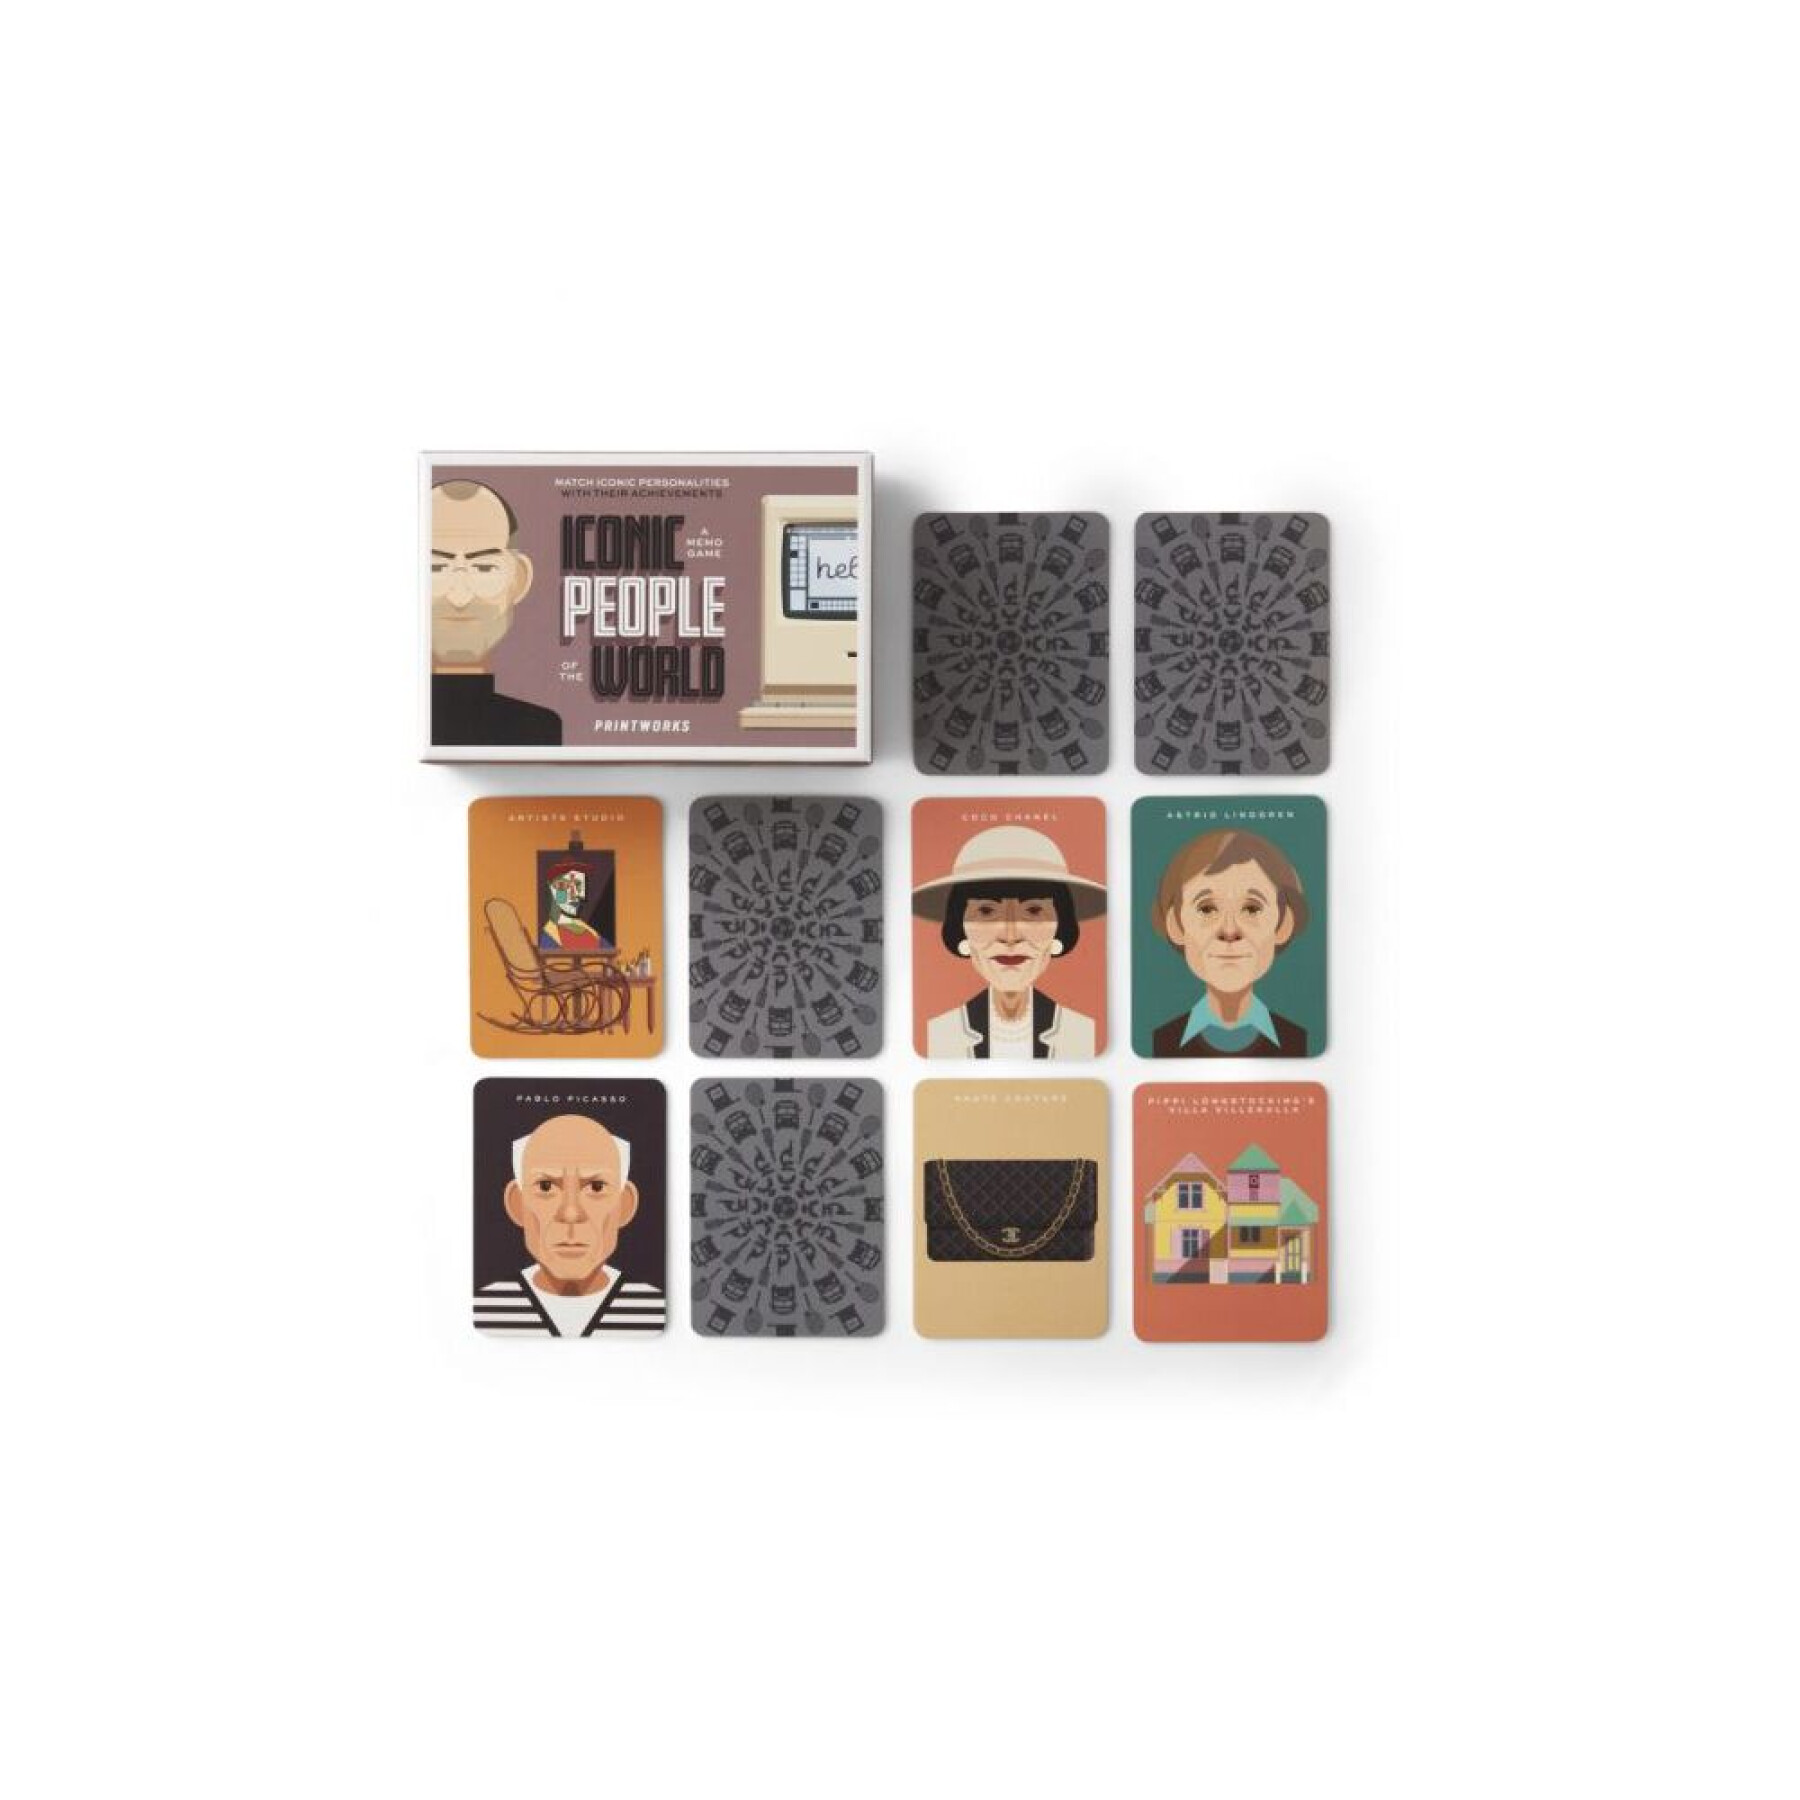 Set aus 6 Kartenspielen Printworks Memo game - Iconic People